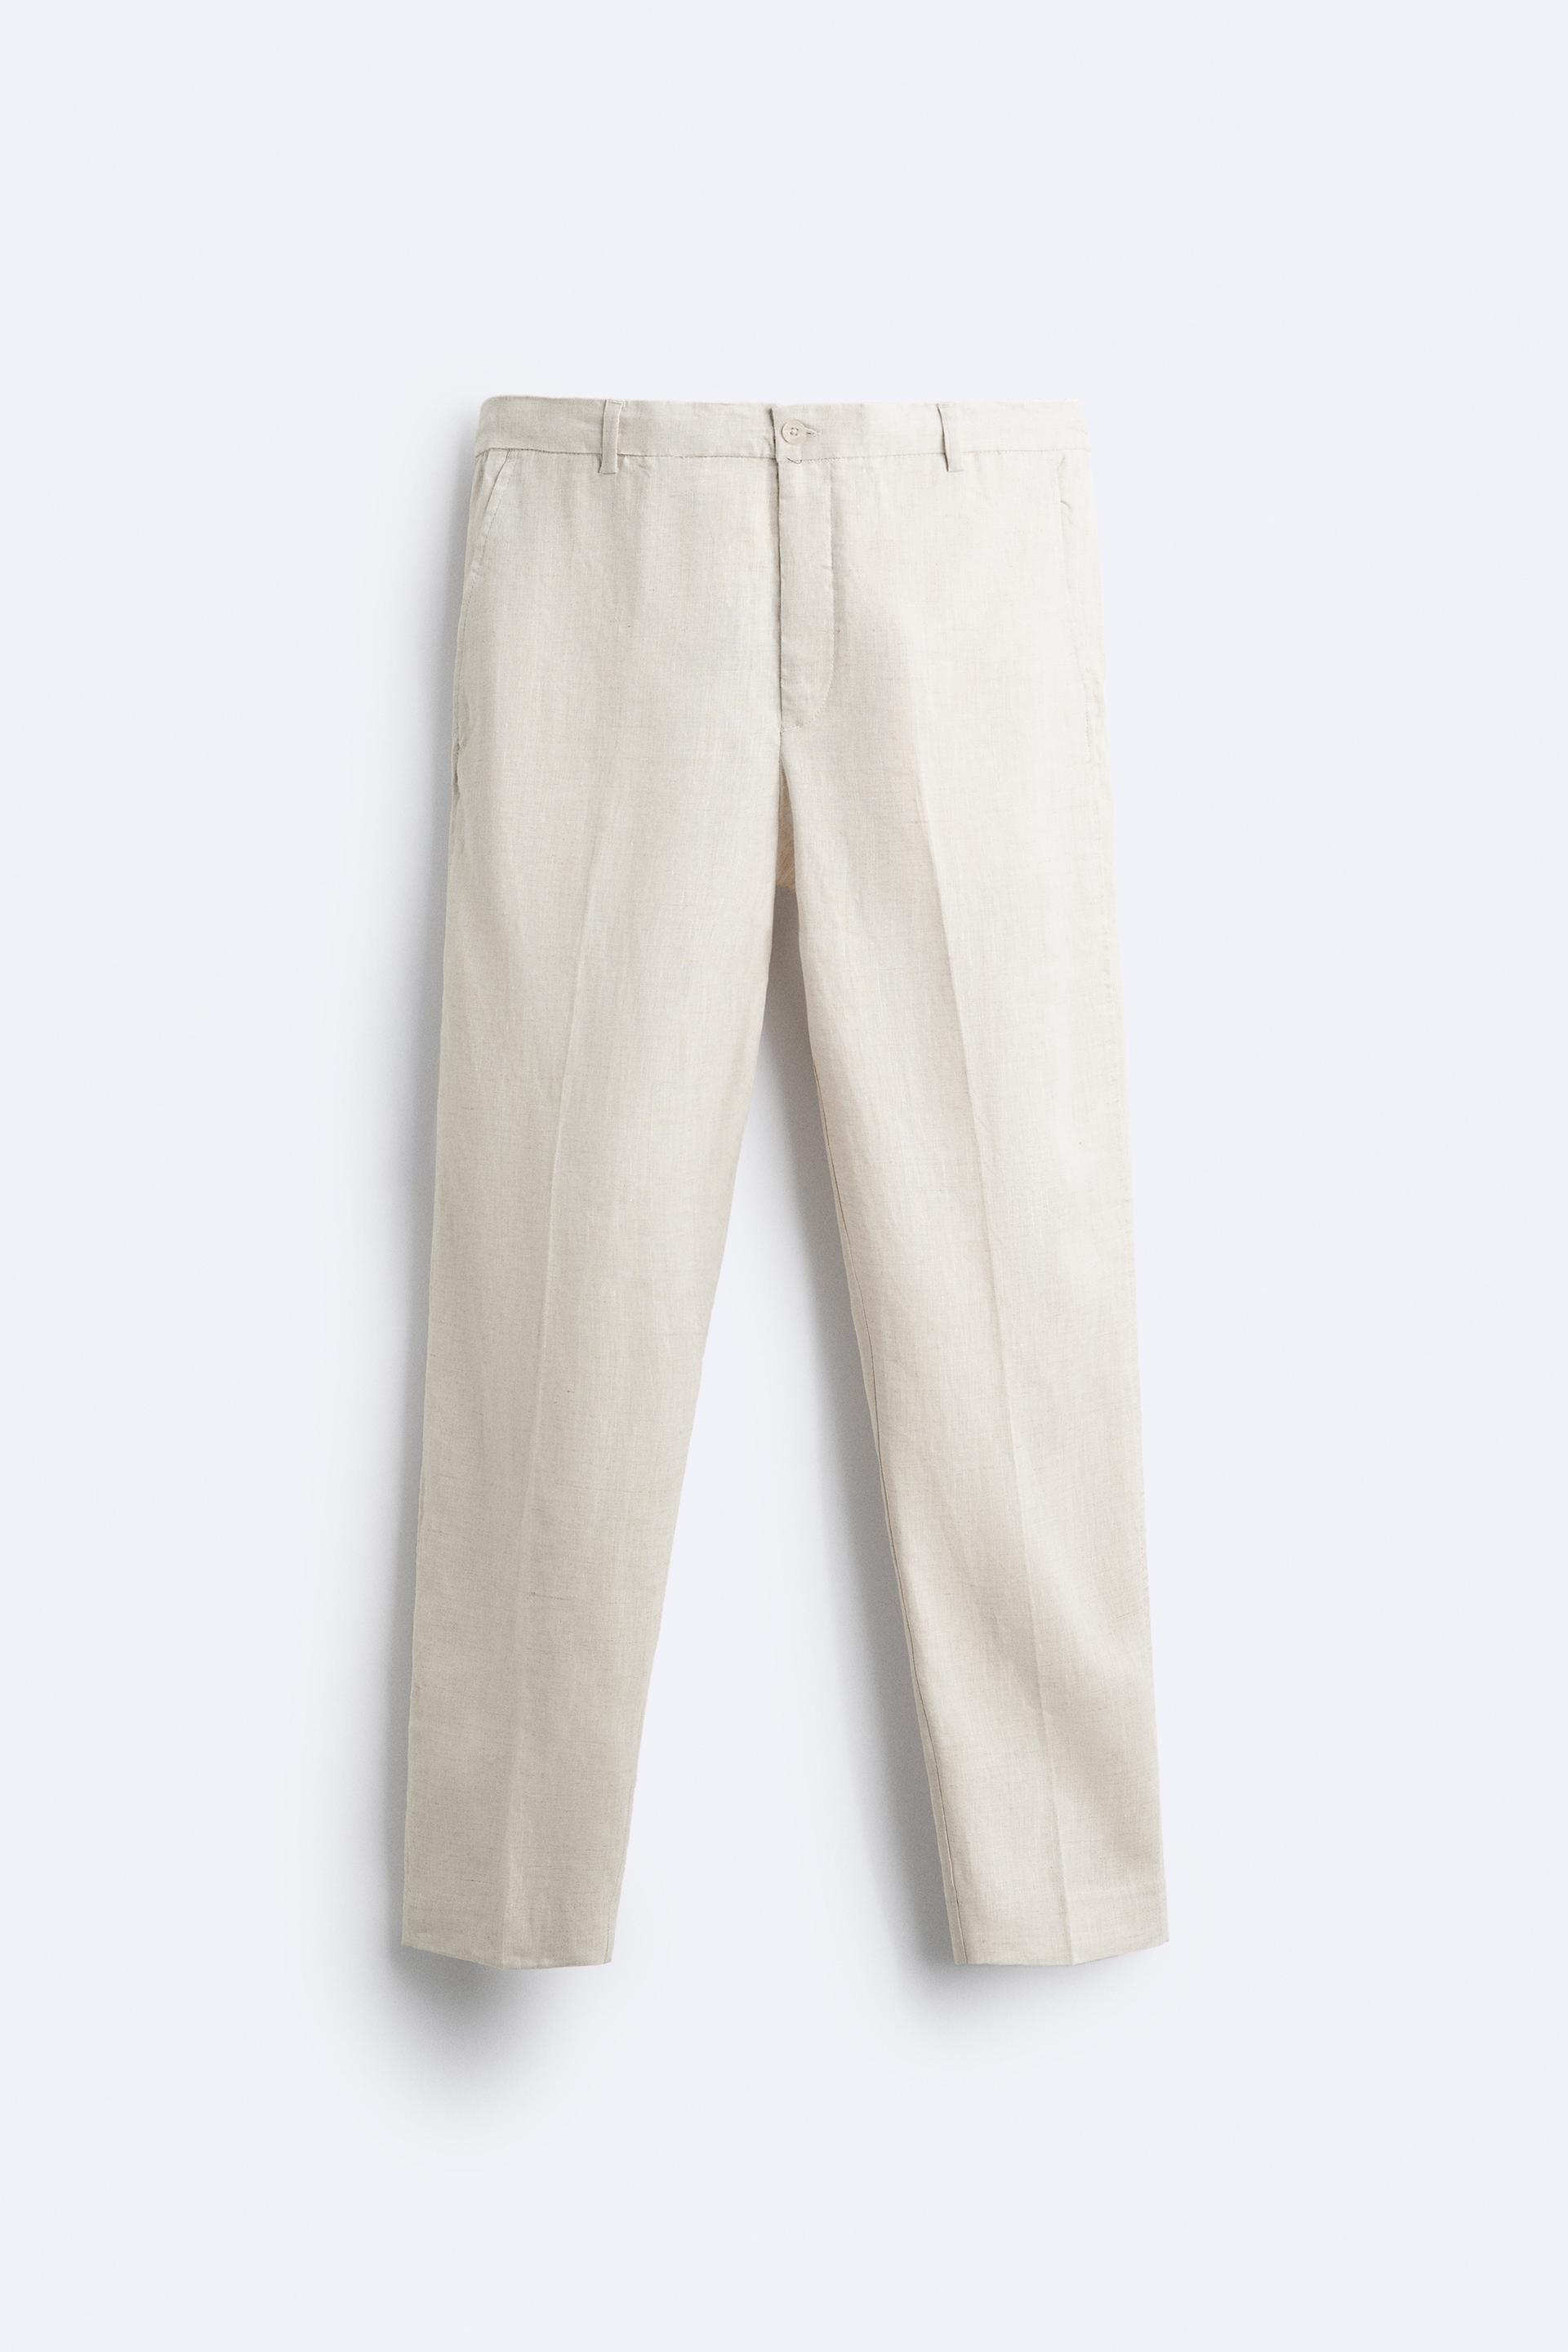 Dharya white-cotton-linen-pants